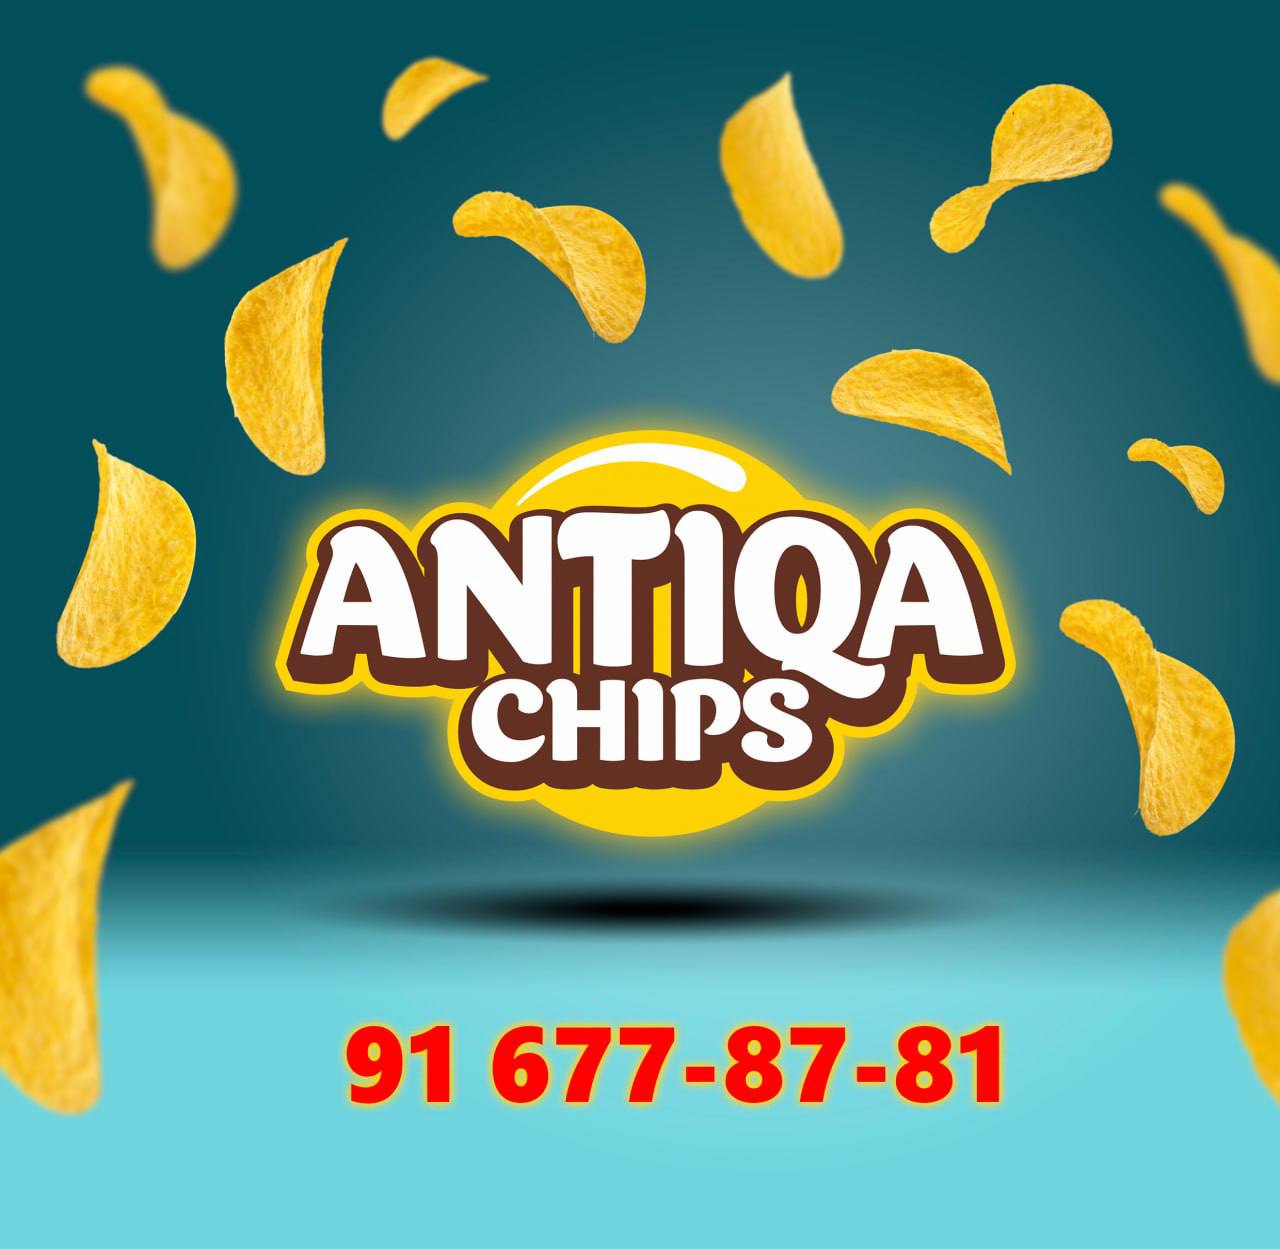 Antiqa chips 